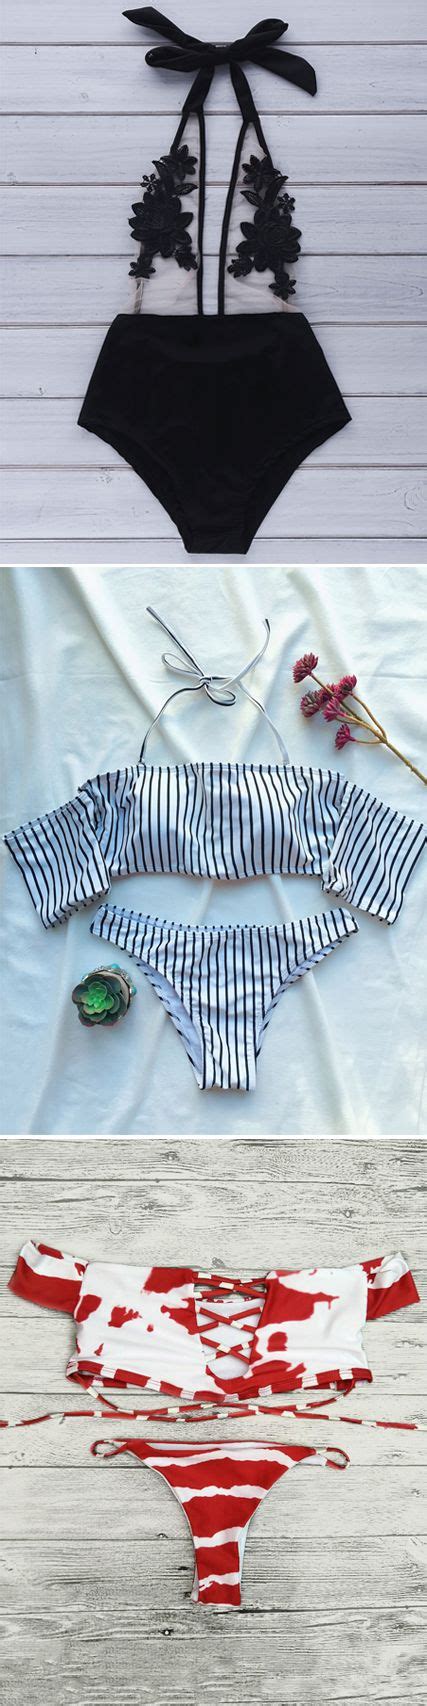 Swimwear In Zaful Swimsuits Bathing Suit Bikini Bikini Set One Pieces Swimwear 2017 Beach